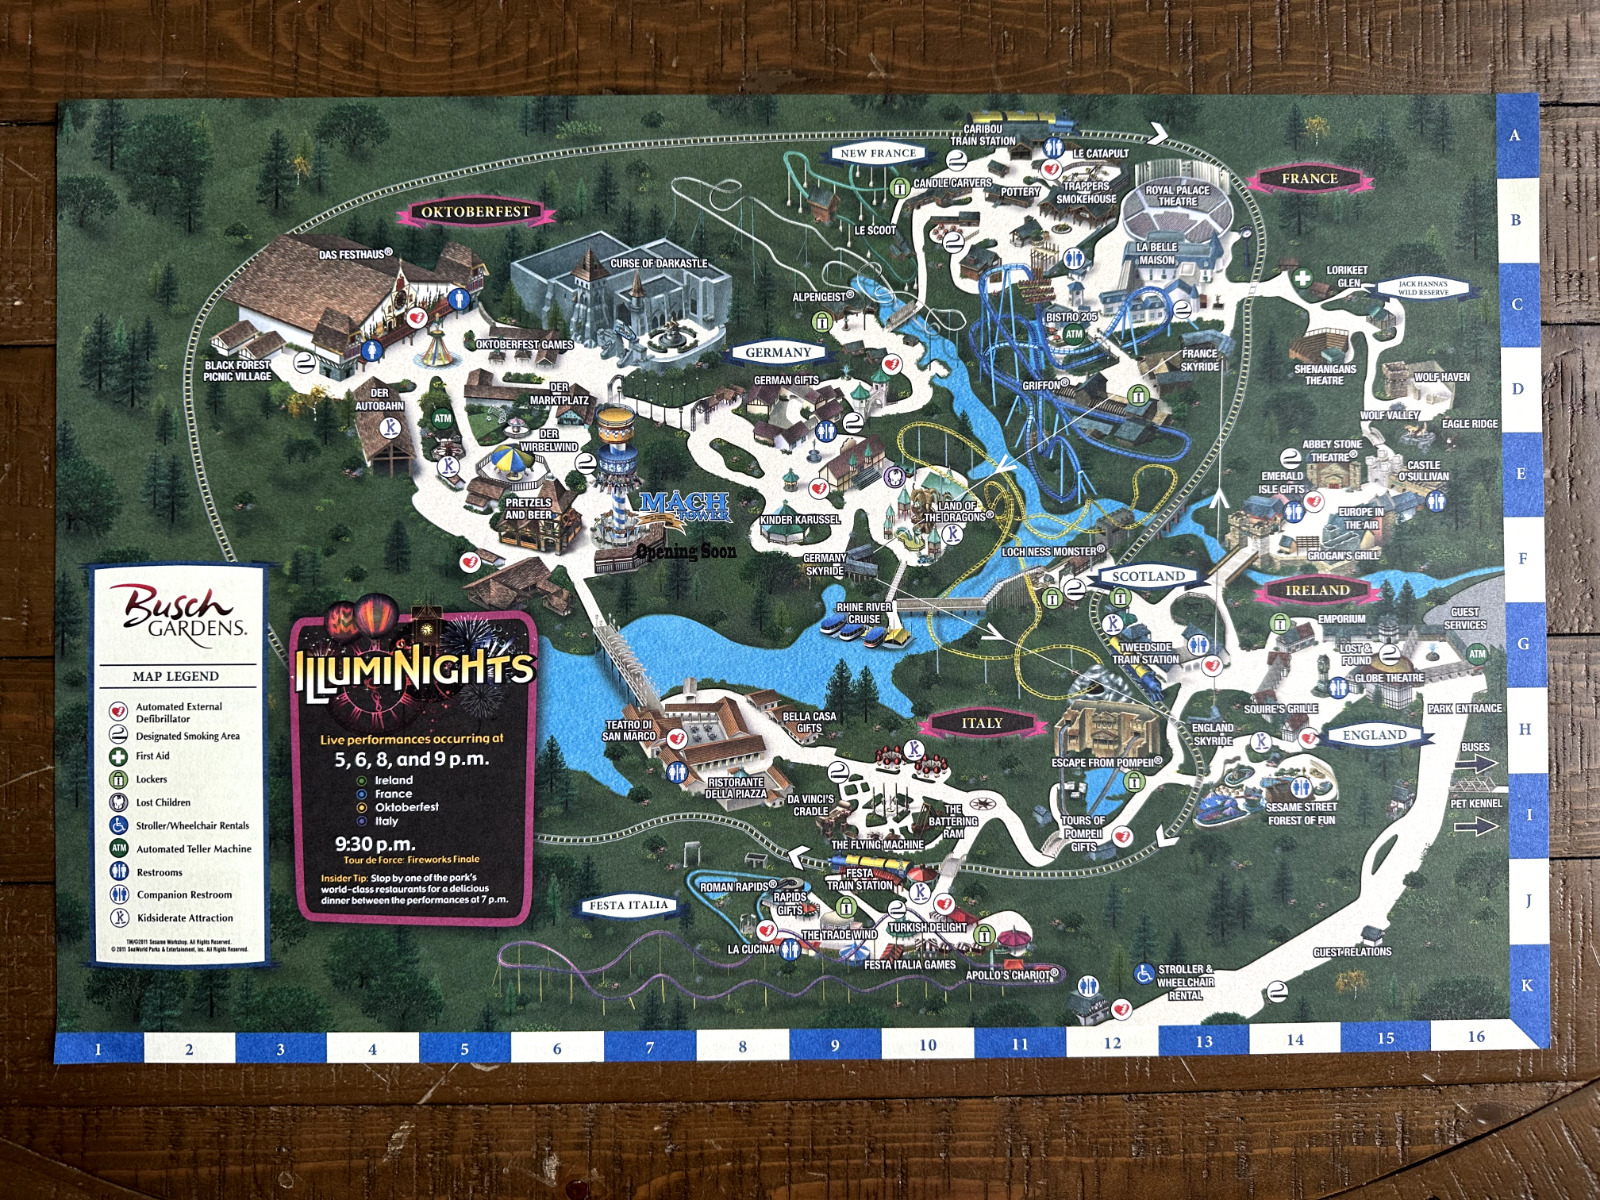 2011 Busch Gardens Williamsburg Theme Park Map / Poster 11x16 (Illuminights)